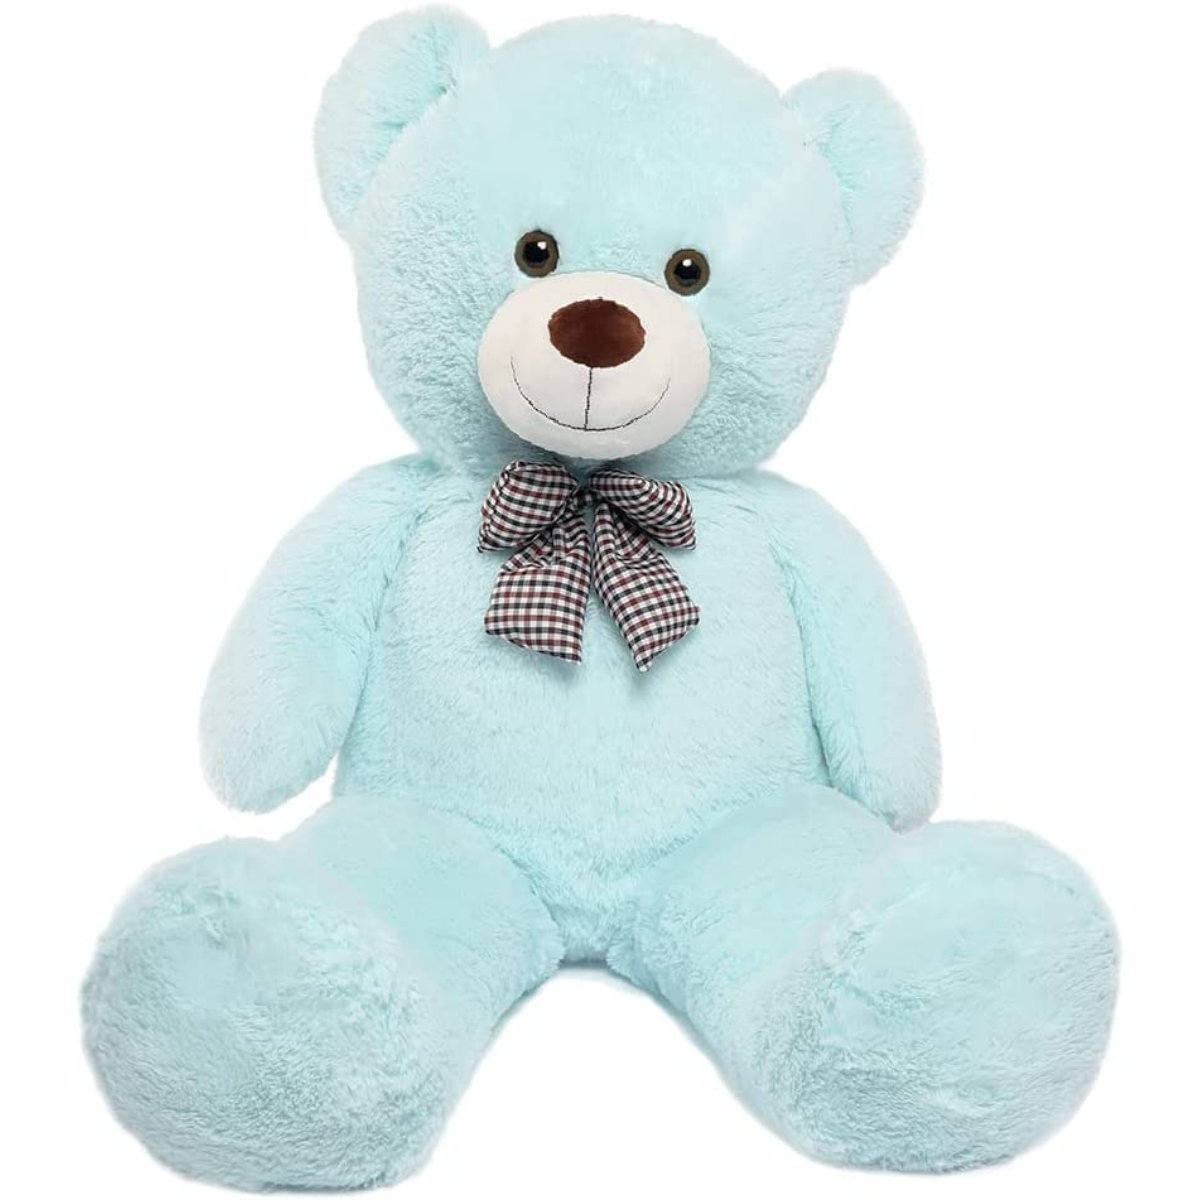 Giant Teddy Bear Stuffed Animal Toy, 47 Inch, Sky Blue